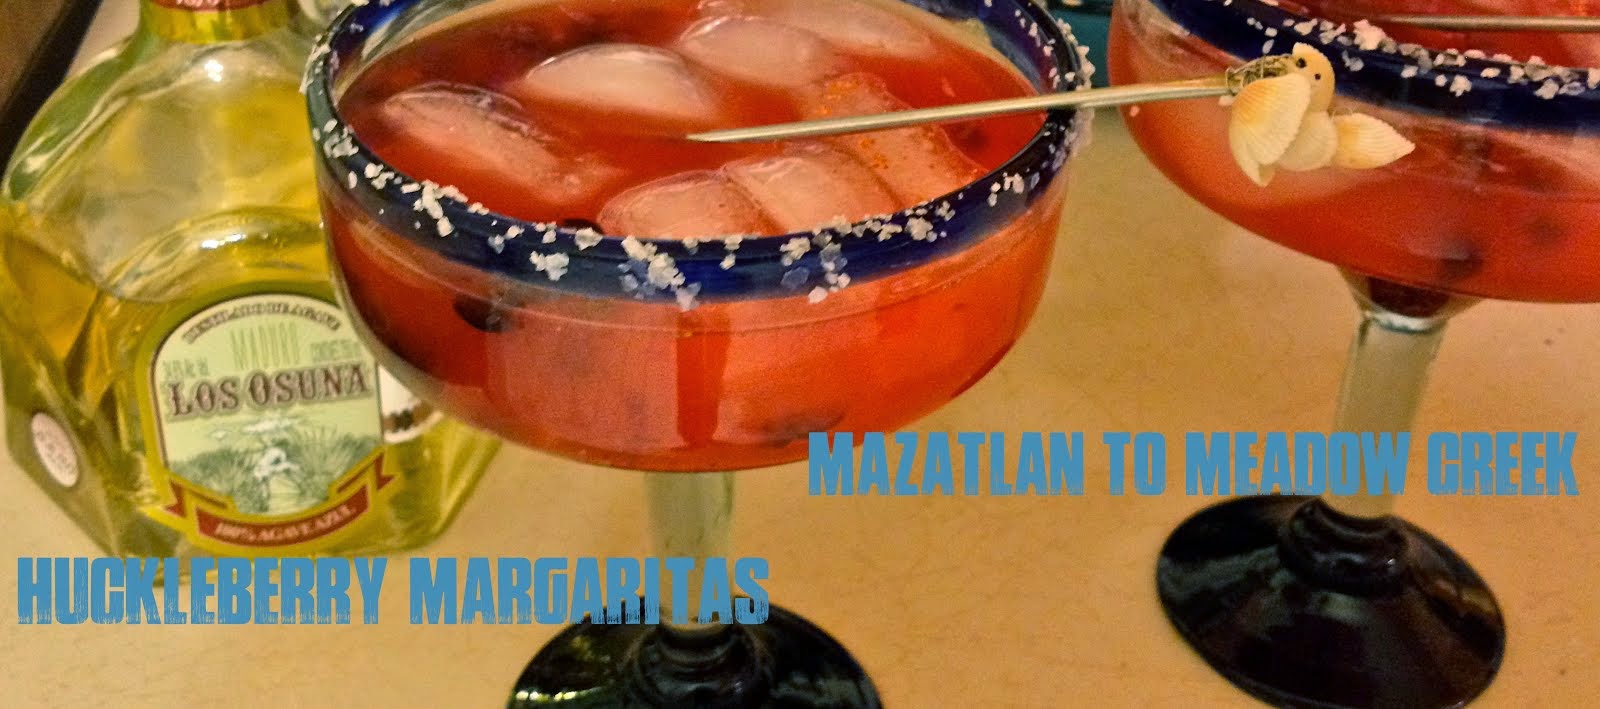 Mazatlán to Meadow Creek: Huckleberry Margaritas